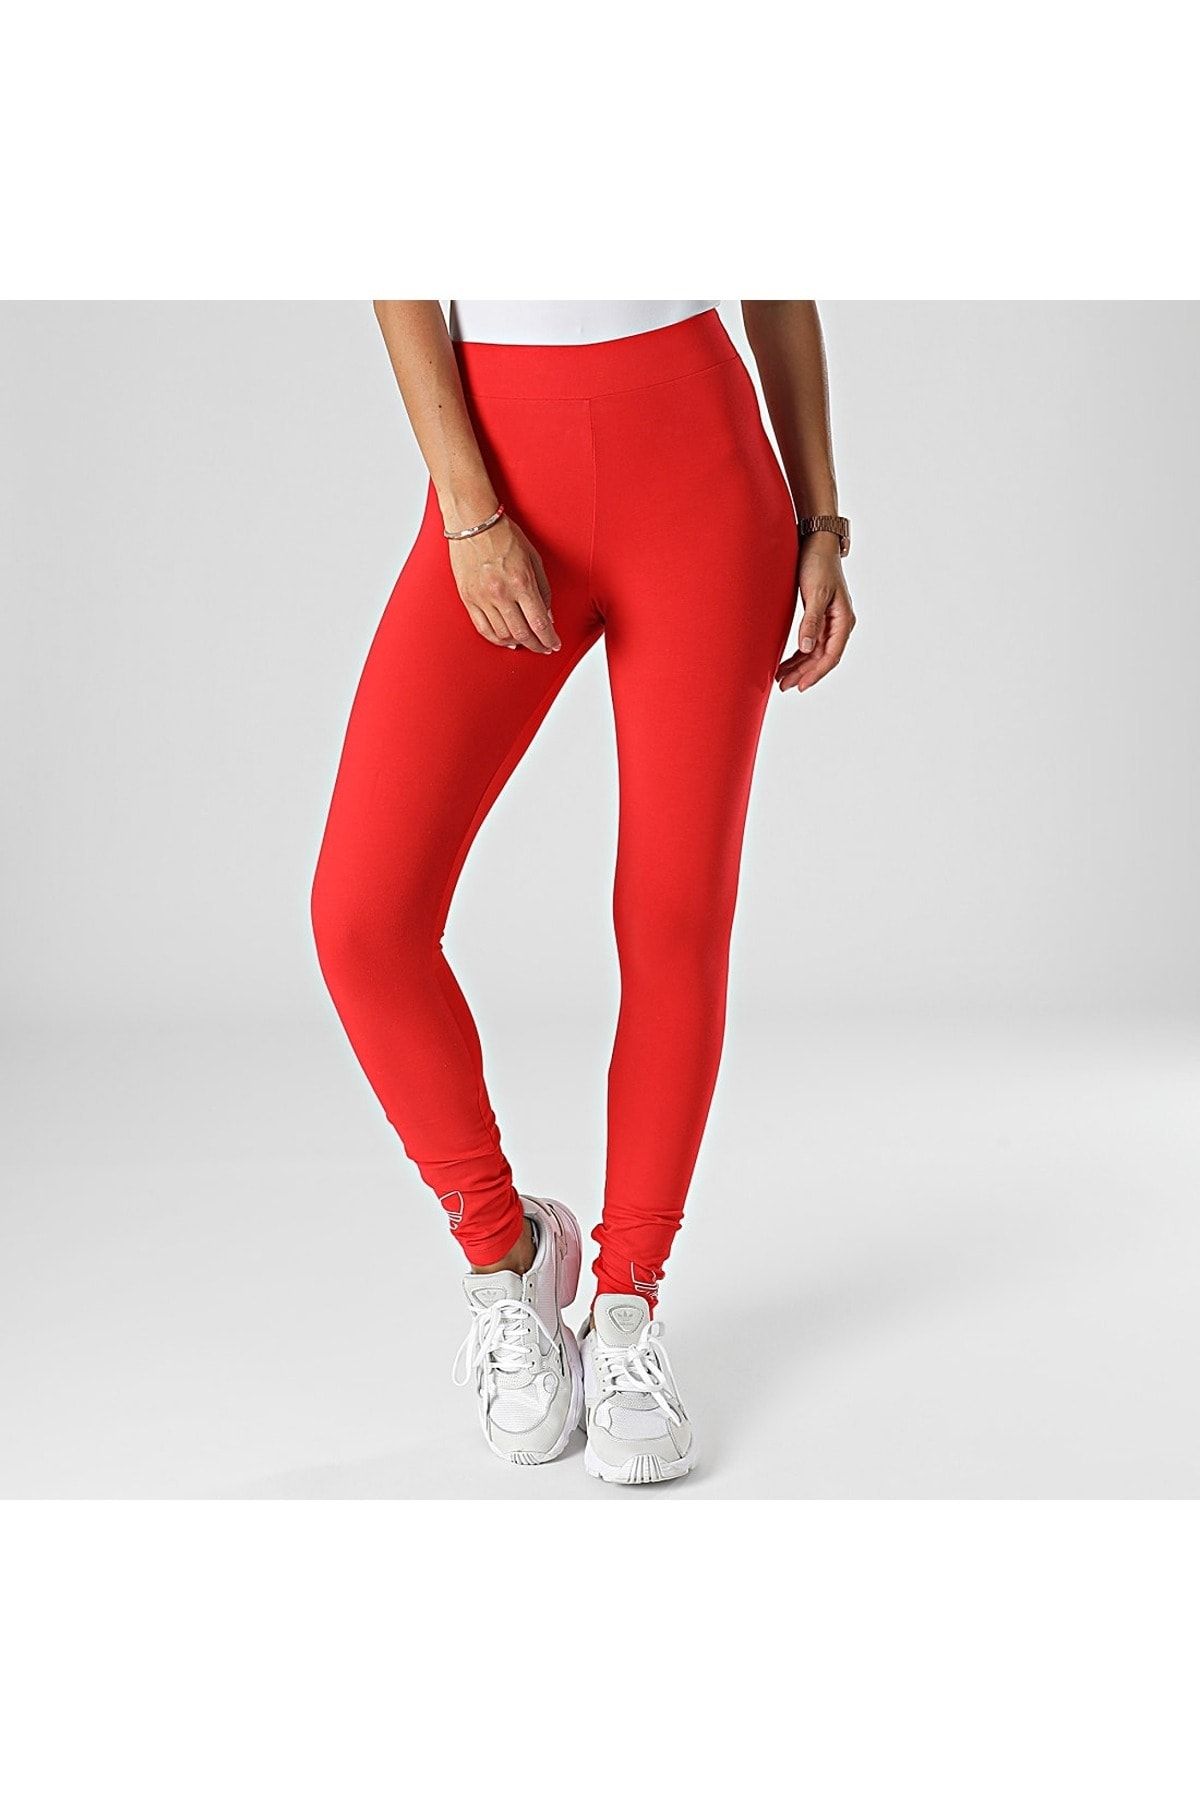 adidas Leggings - Red - High Waist - Trendyol